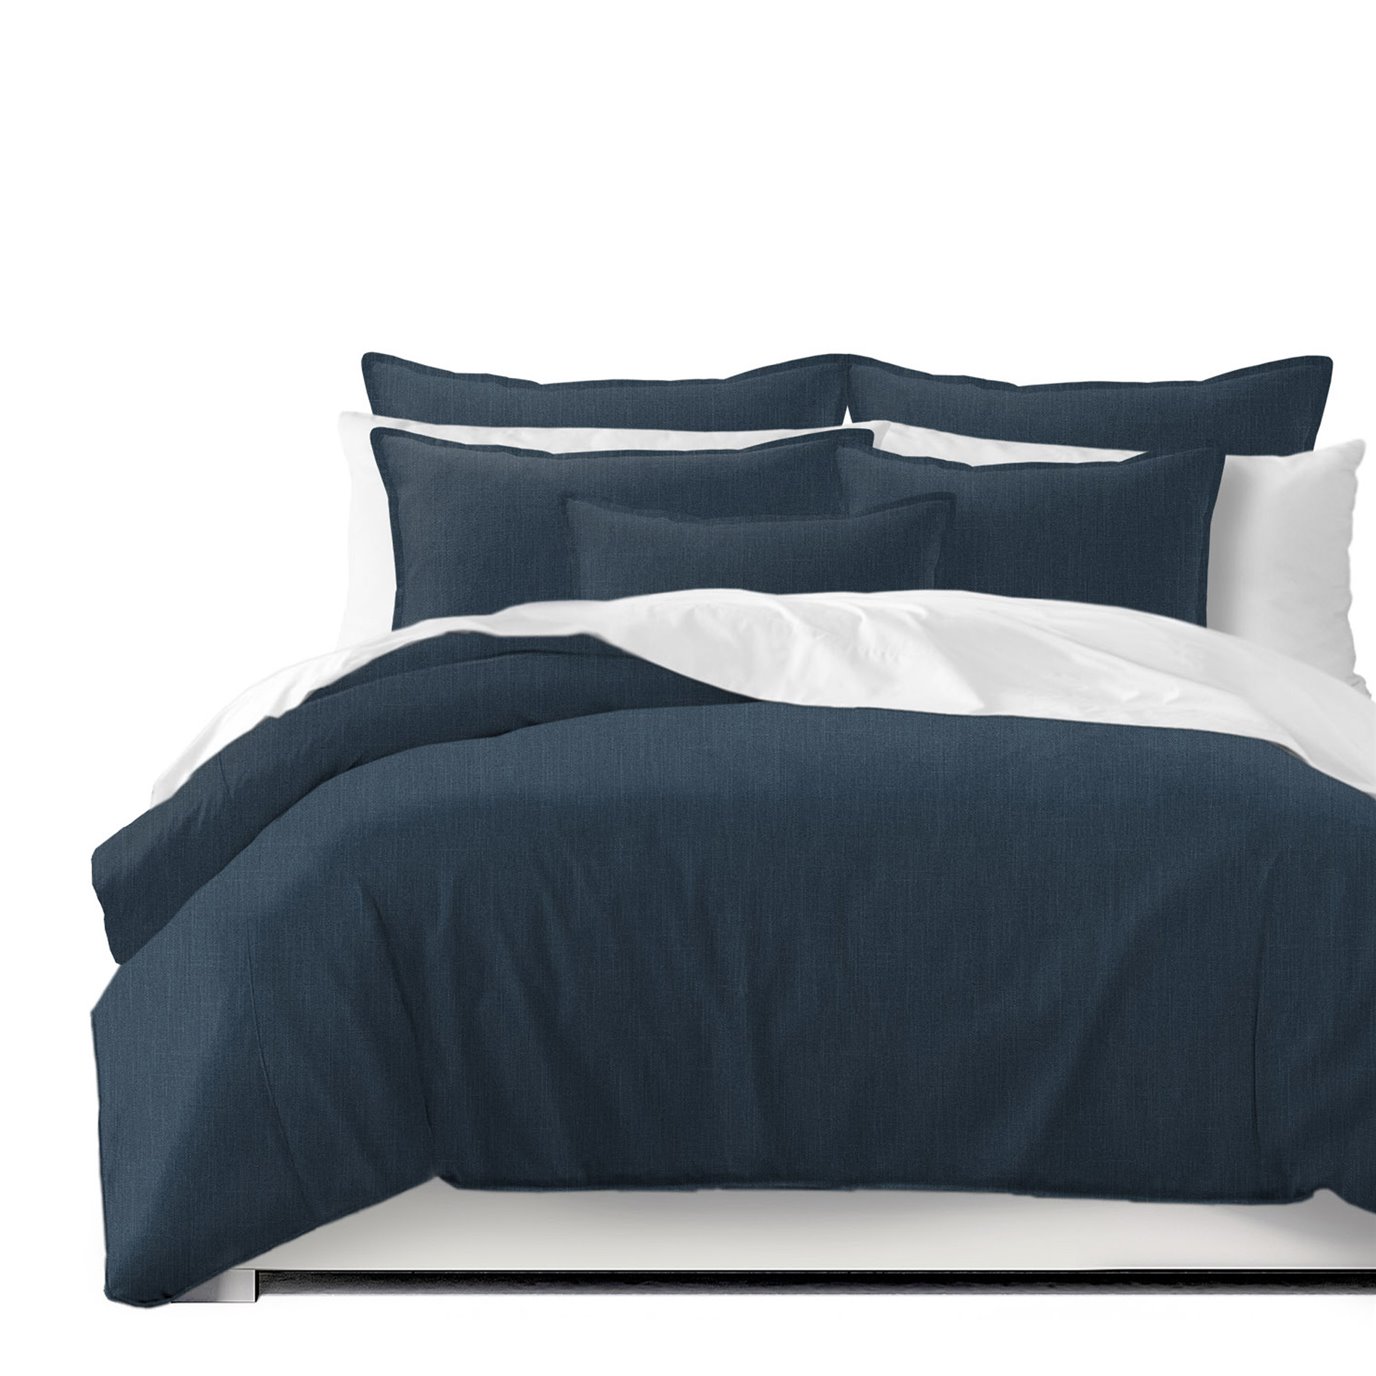 Sutton Navy Comforter and Pillow Sham(s) Set - Size Super King